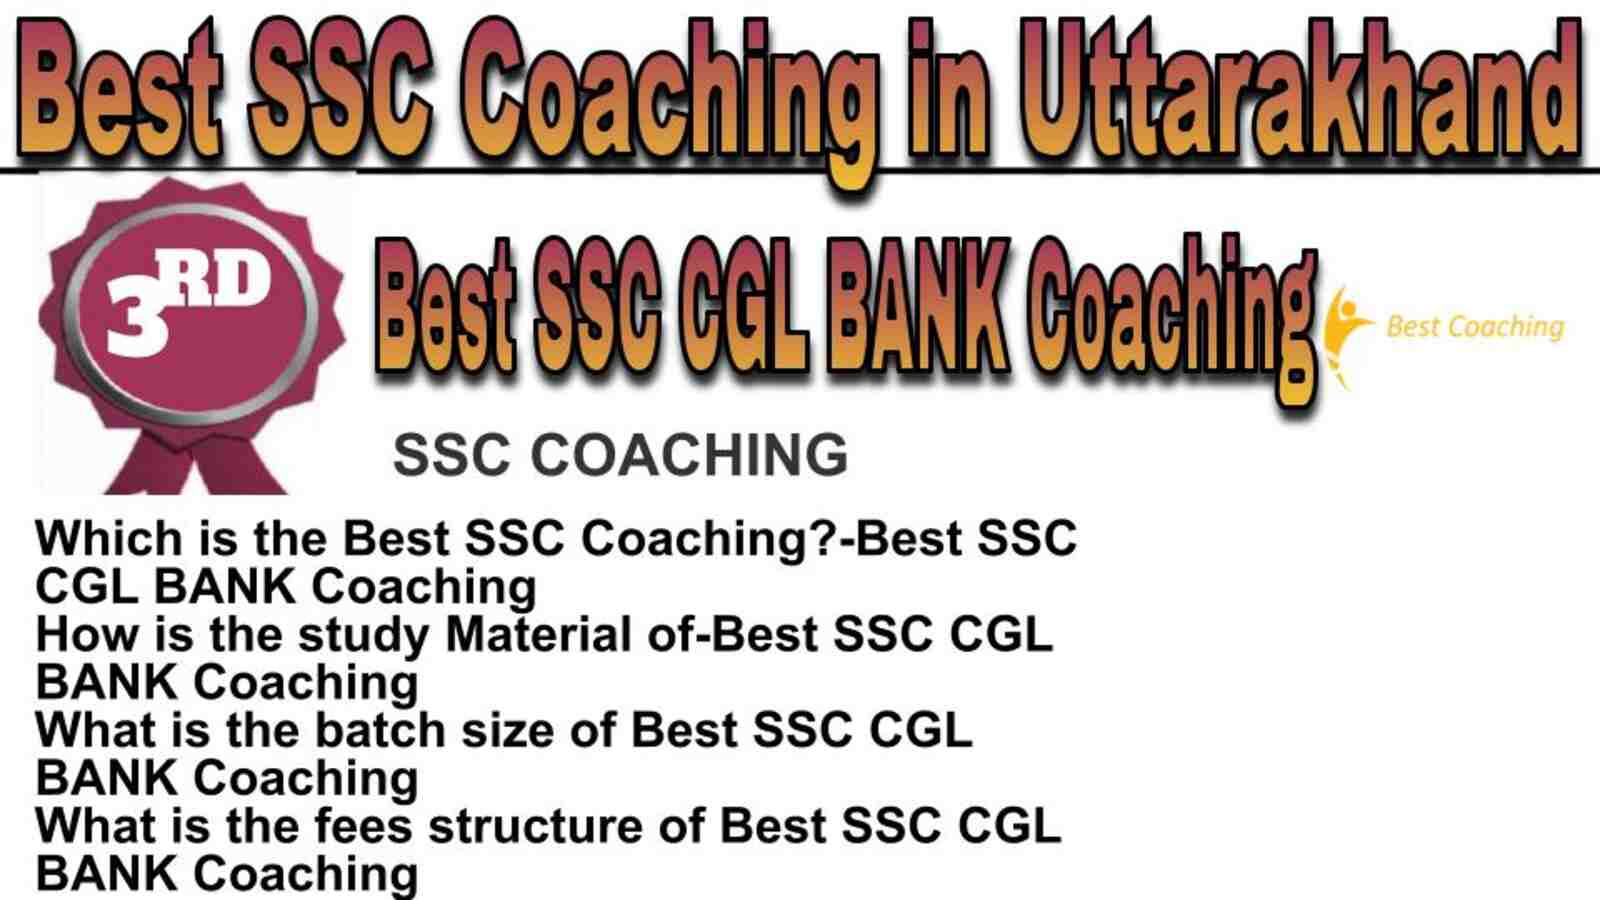 Rank 3 best SSC coaching in Uttarakhand